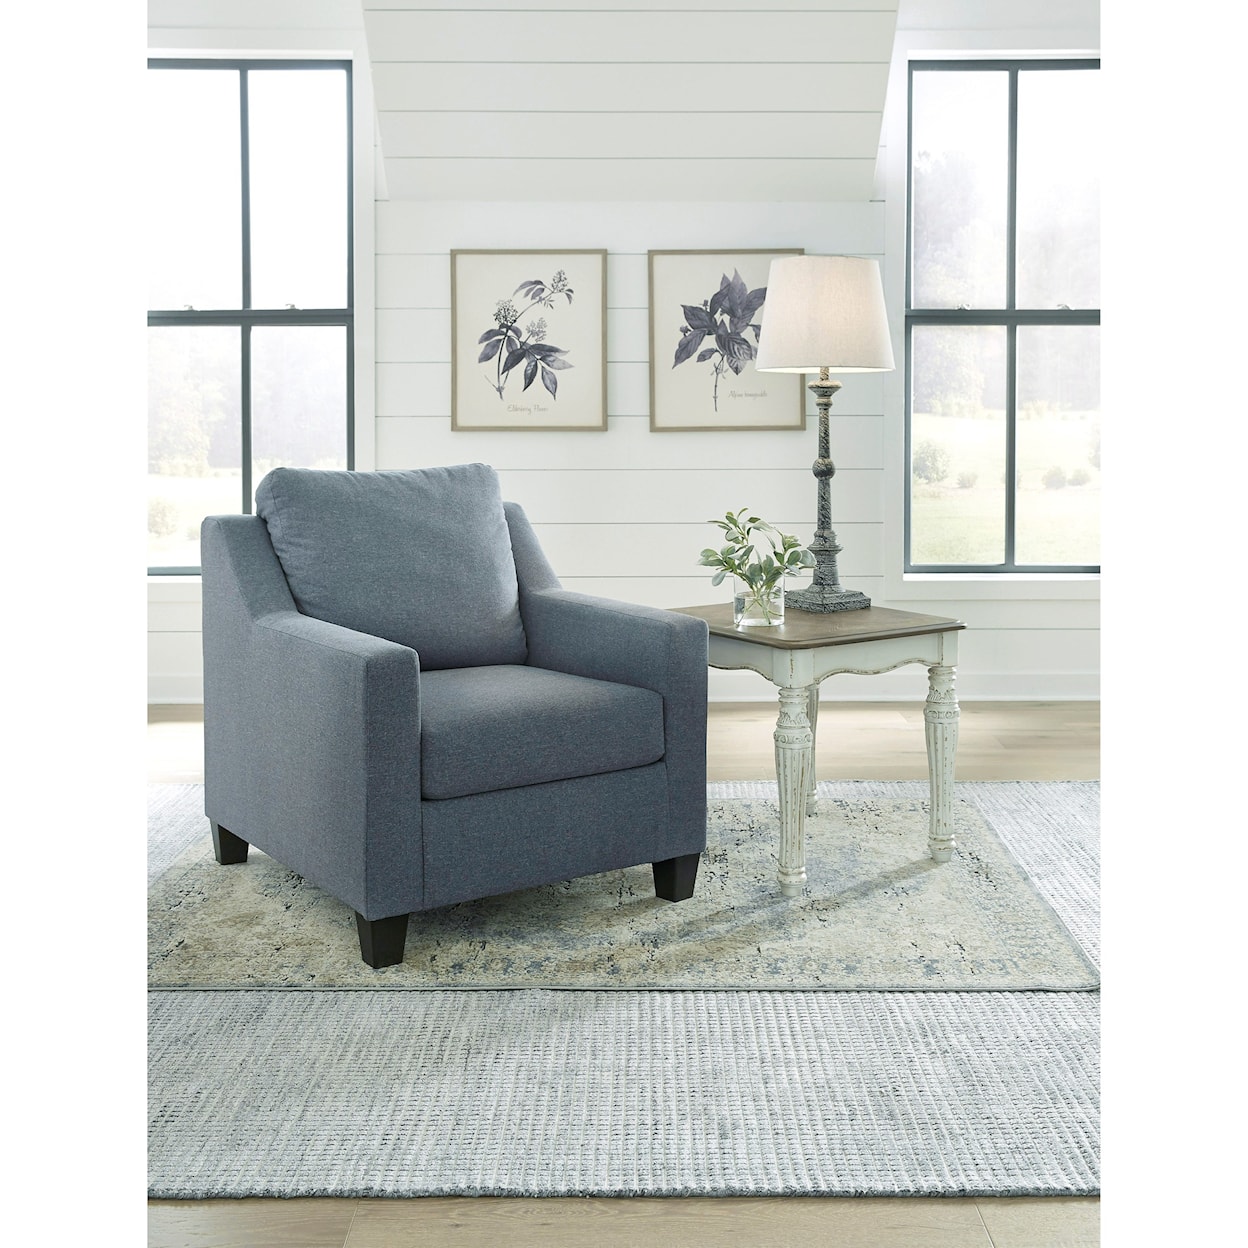 Ashley Furniture Benchcraft Lemly Chair